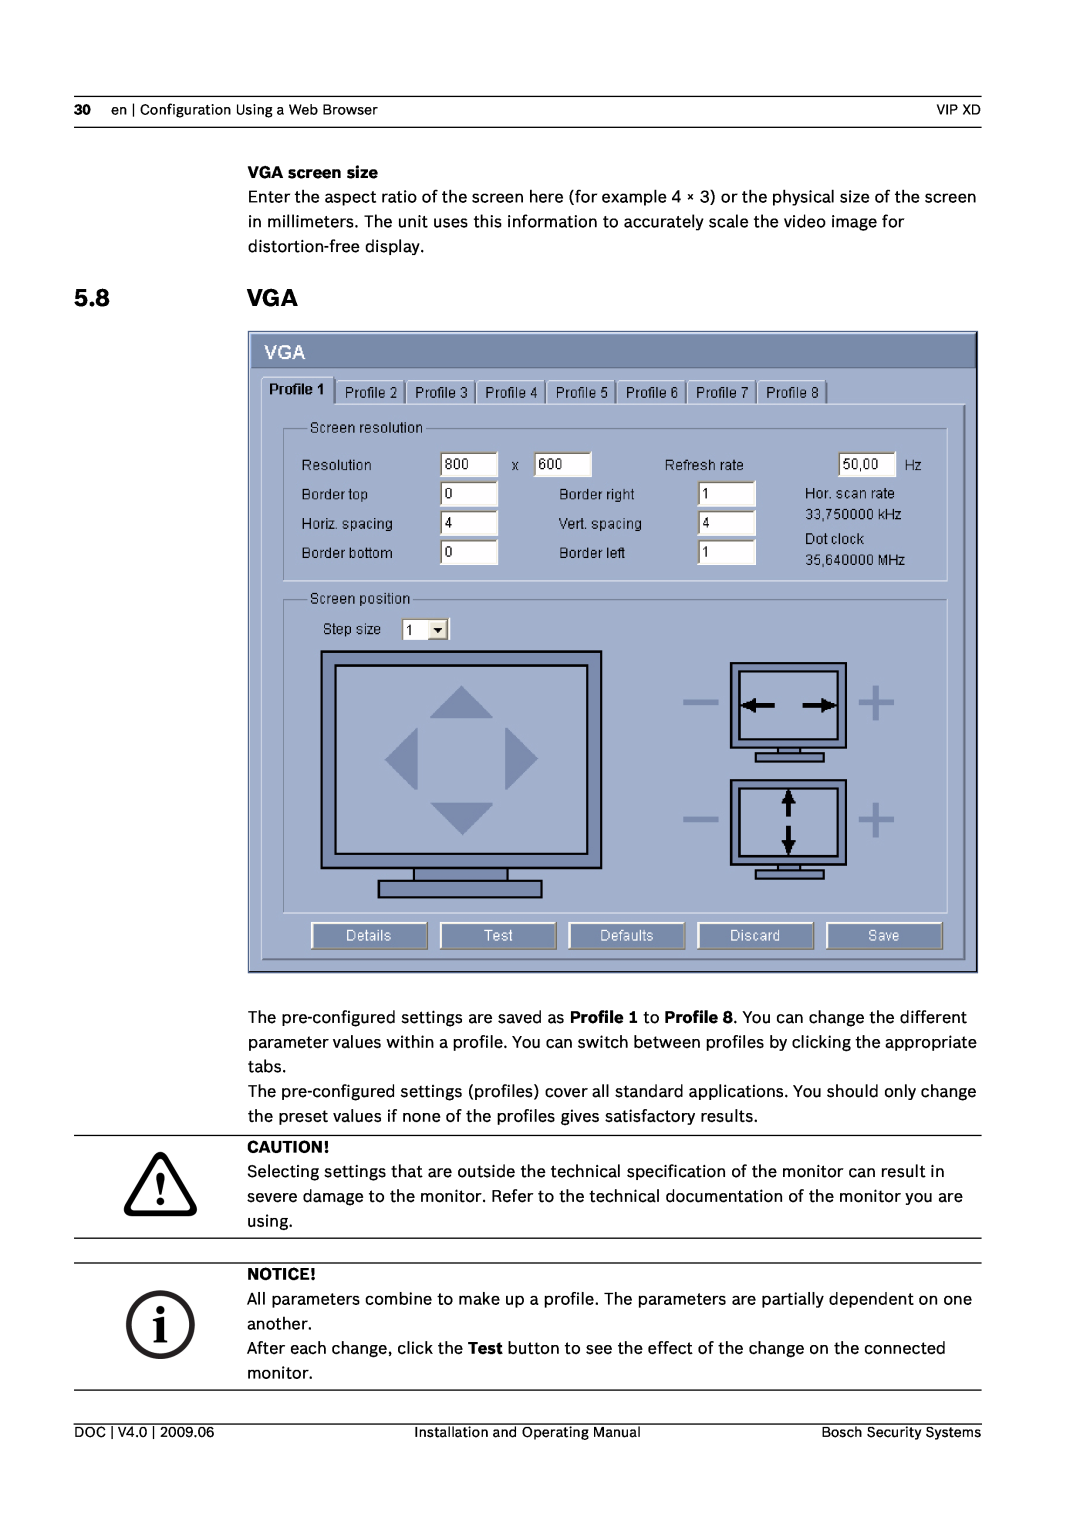 Bosch Appliances XD, VIP manual 5.8VGA, VGA screen size 